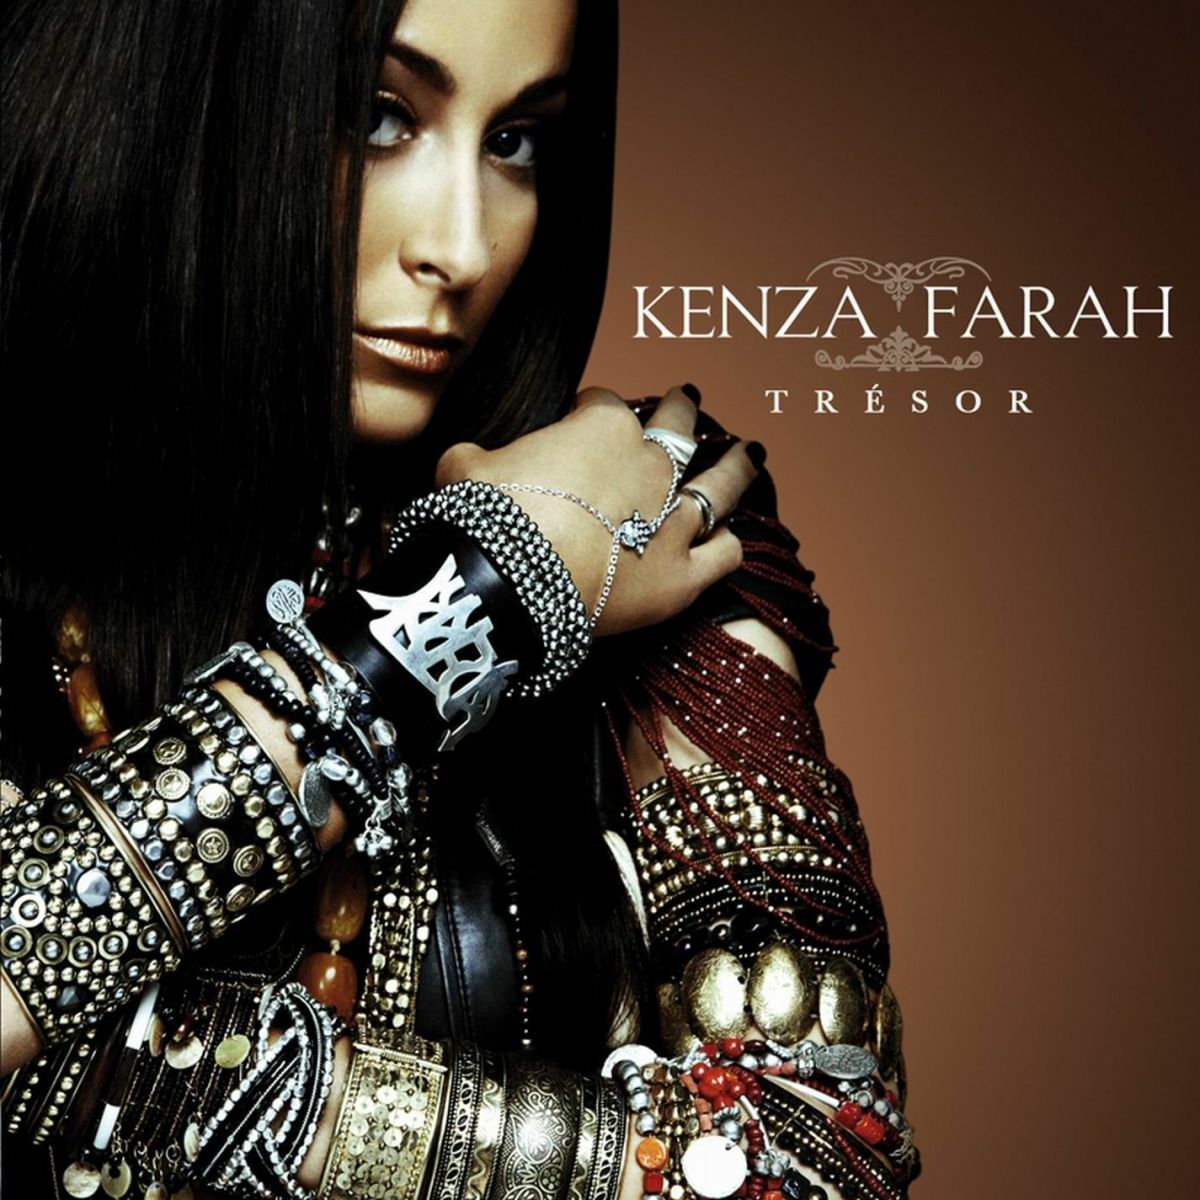 Kenza Farah: albums